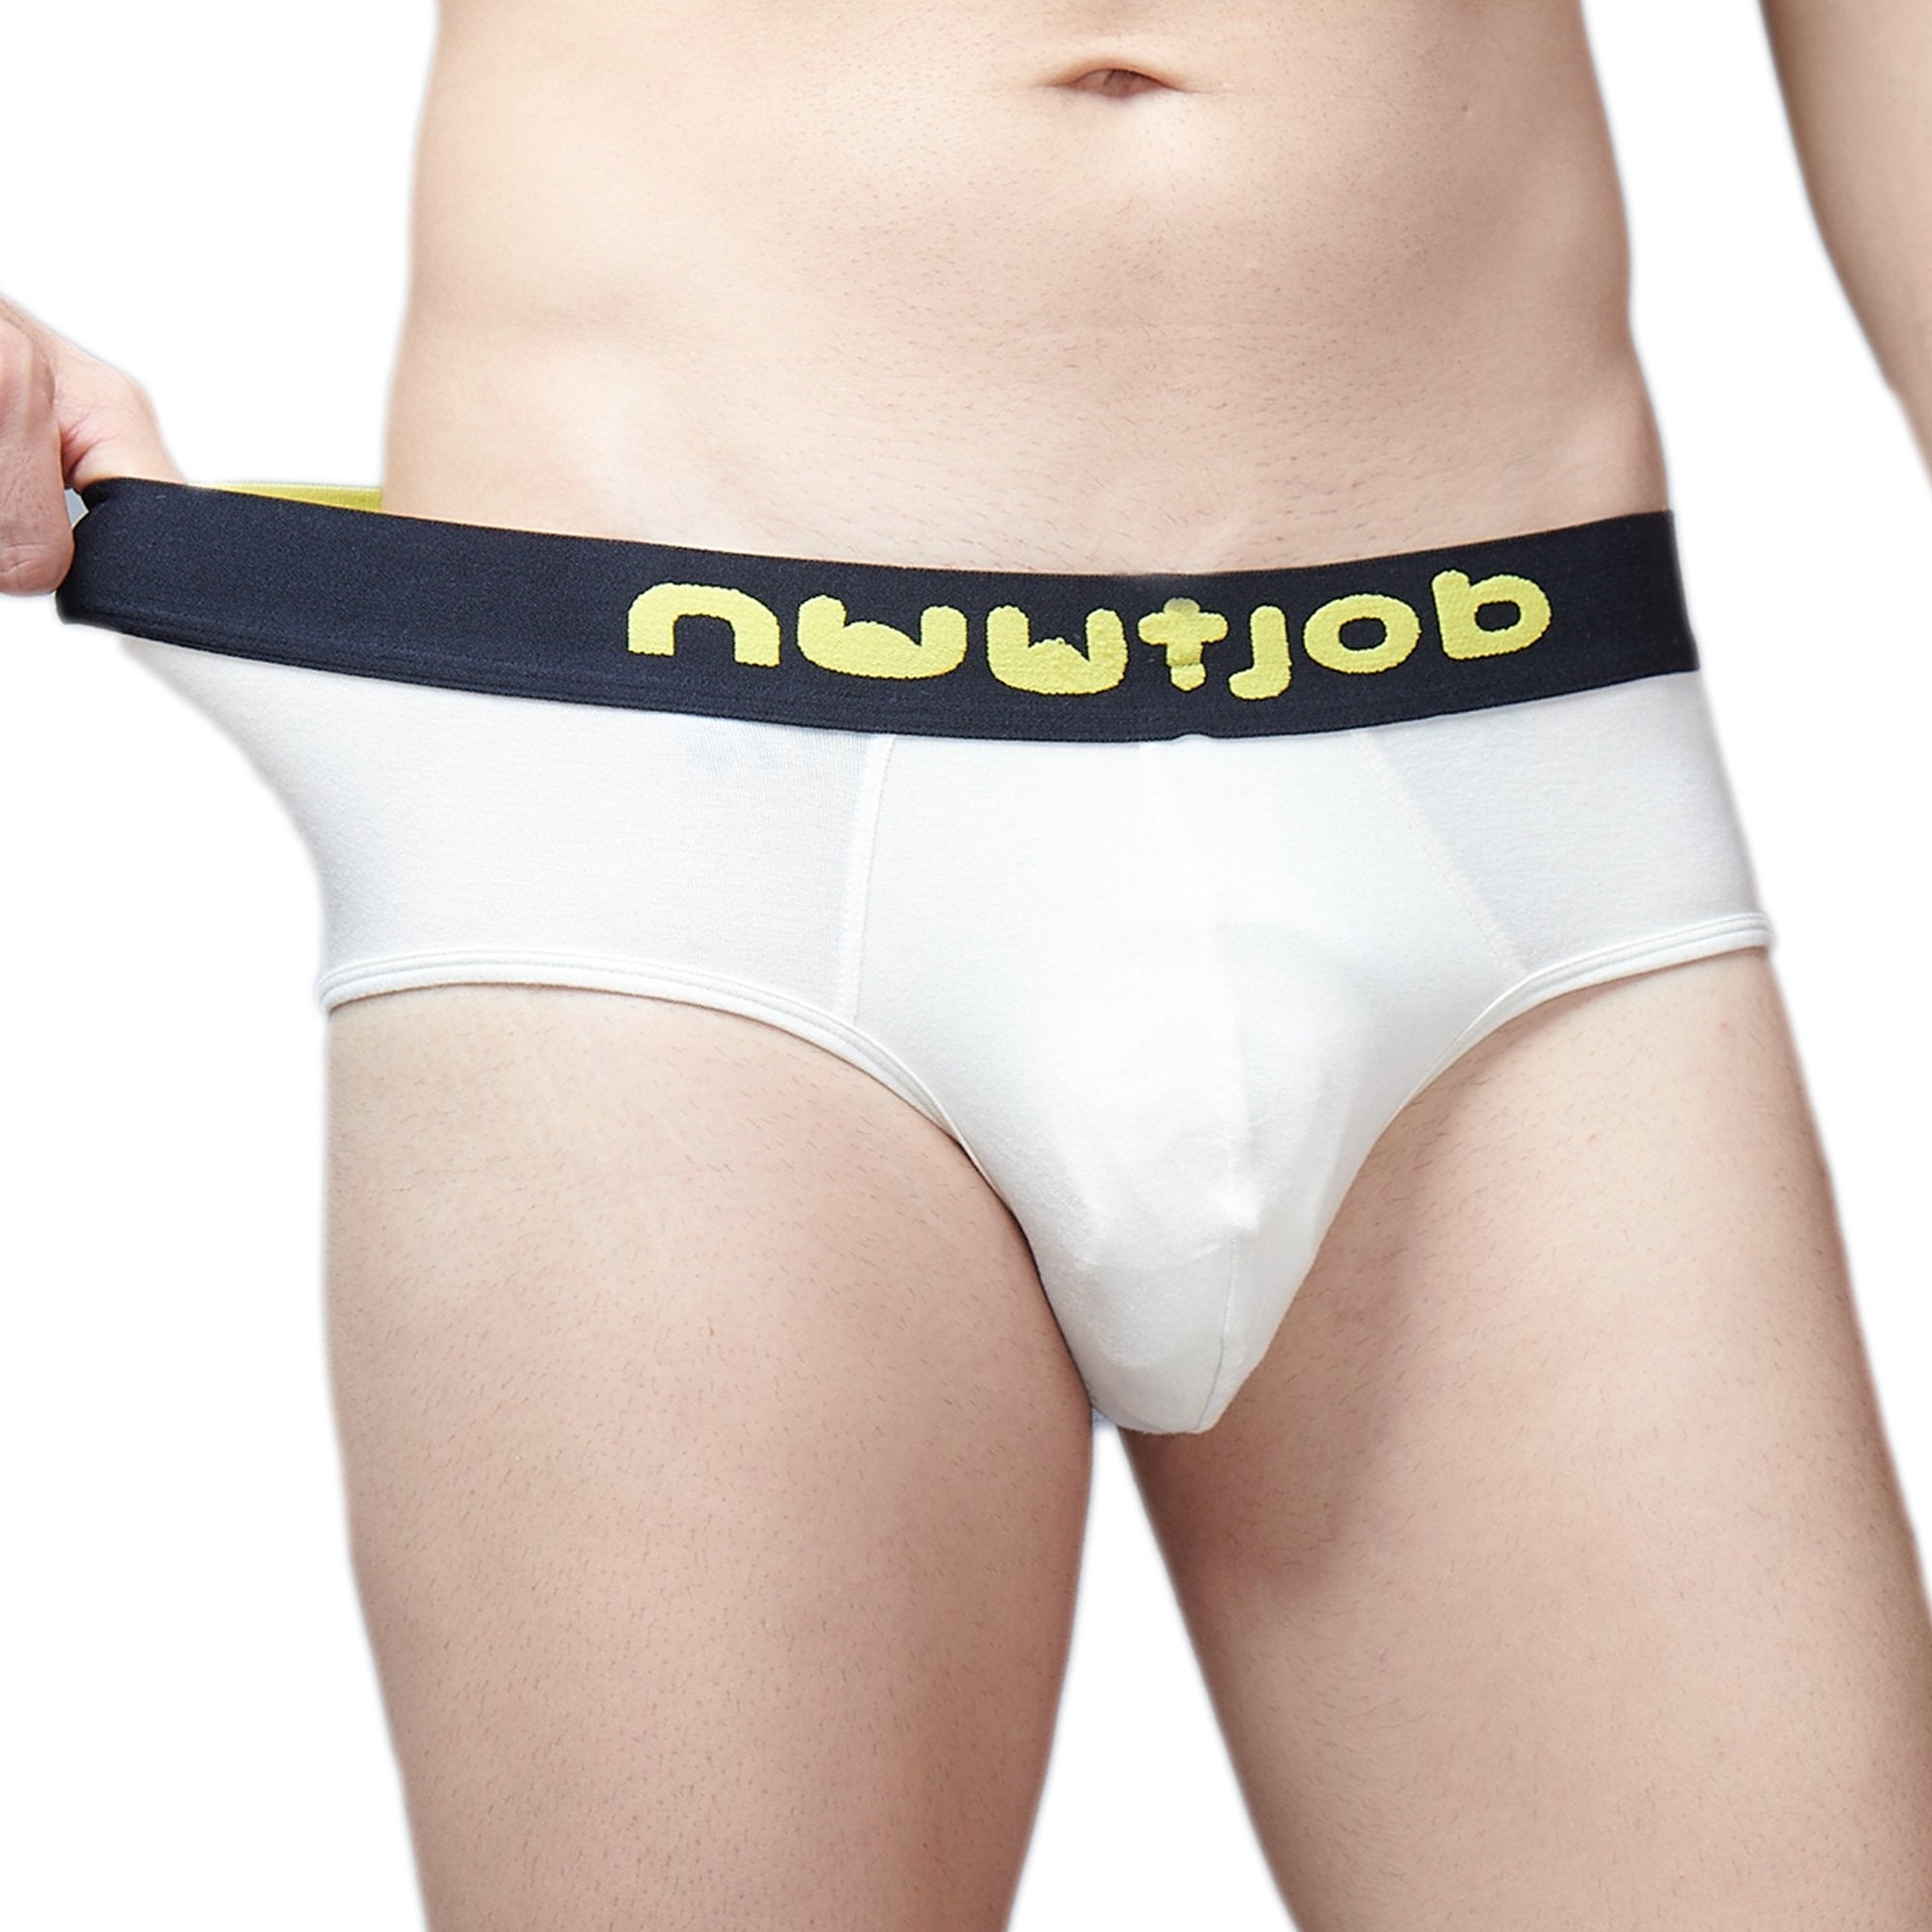 Nuutcase: Bamboo Underwear & Briefs for Men